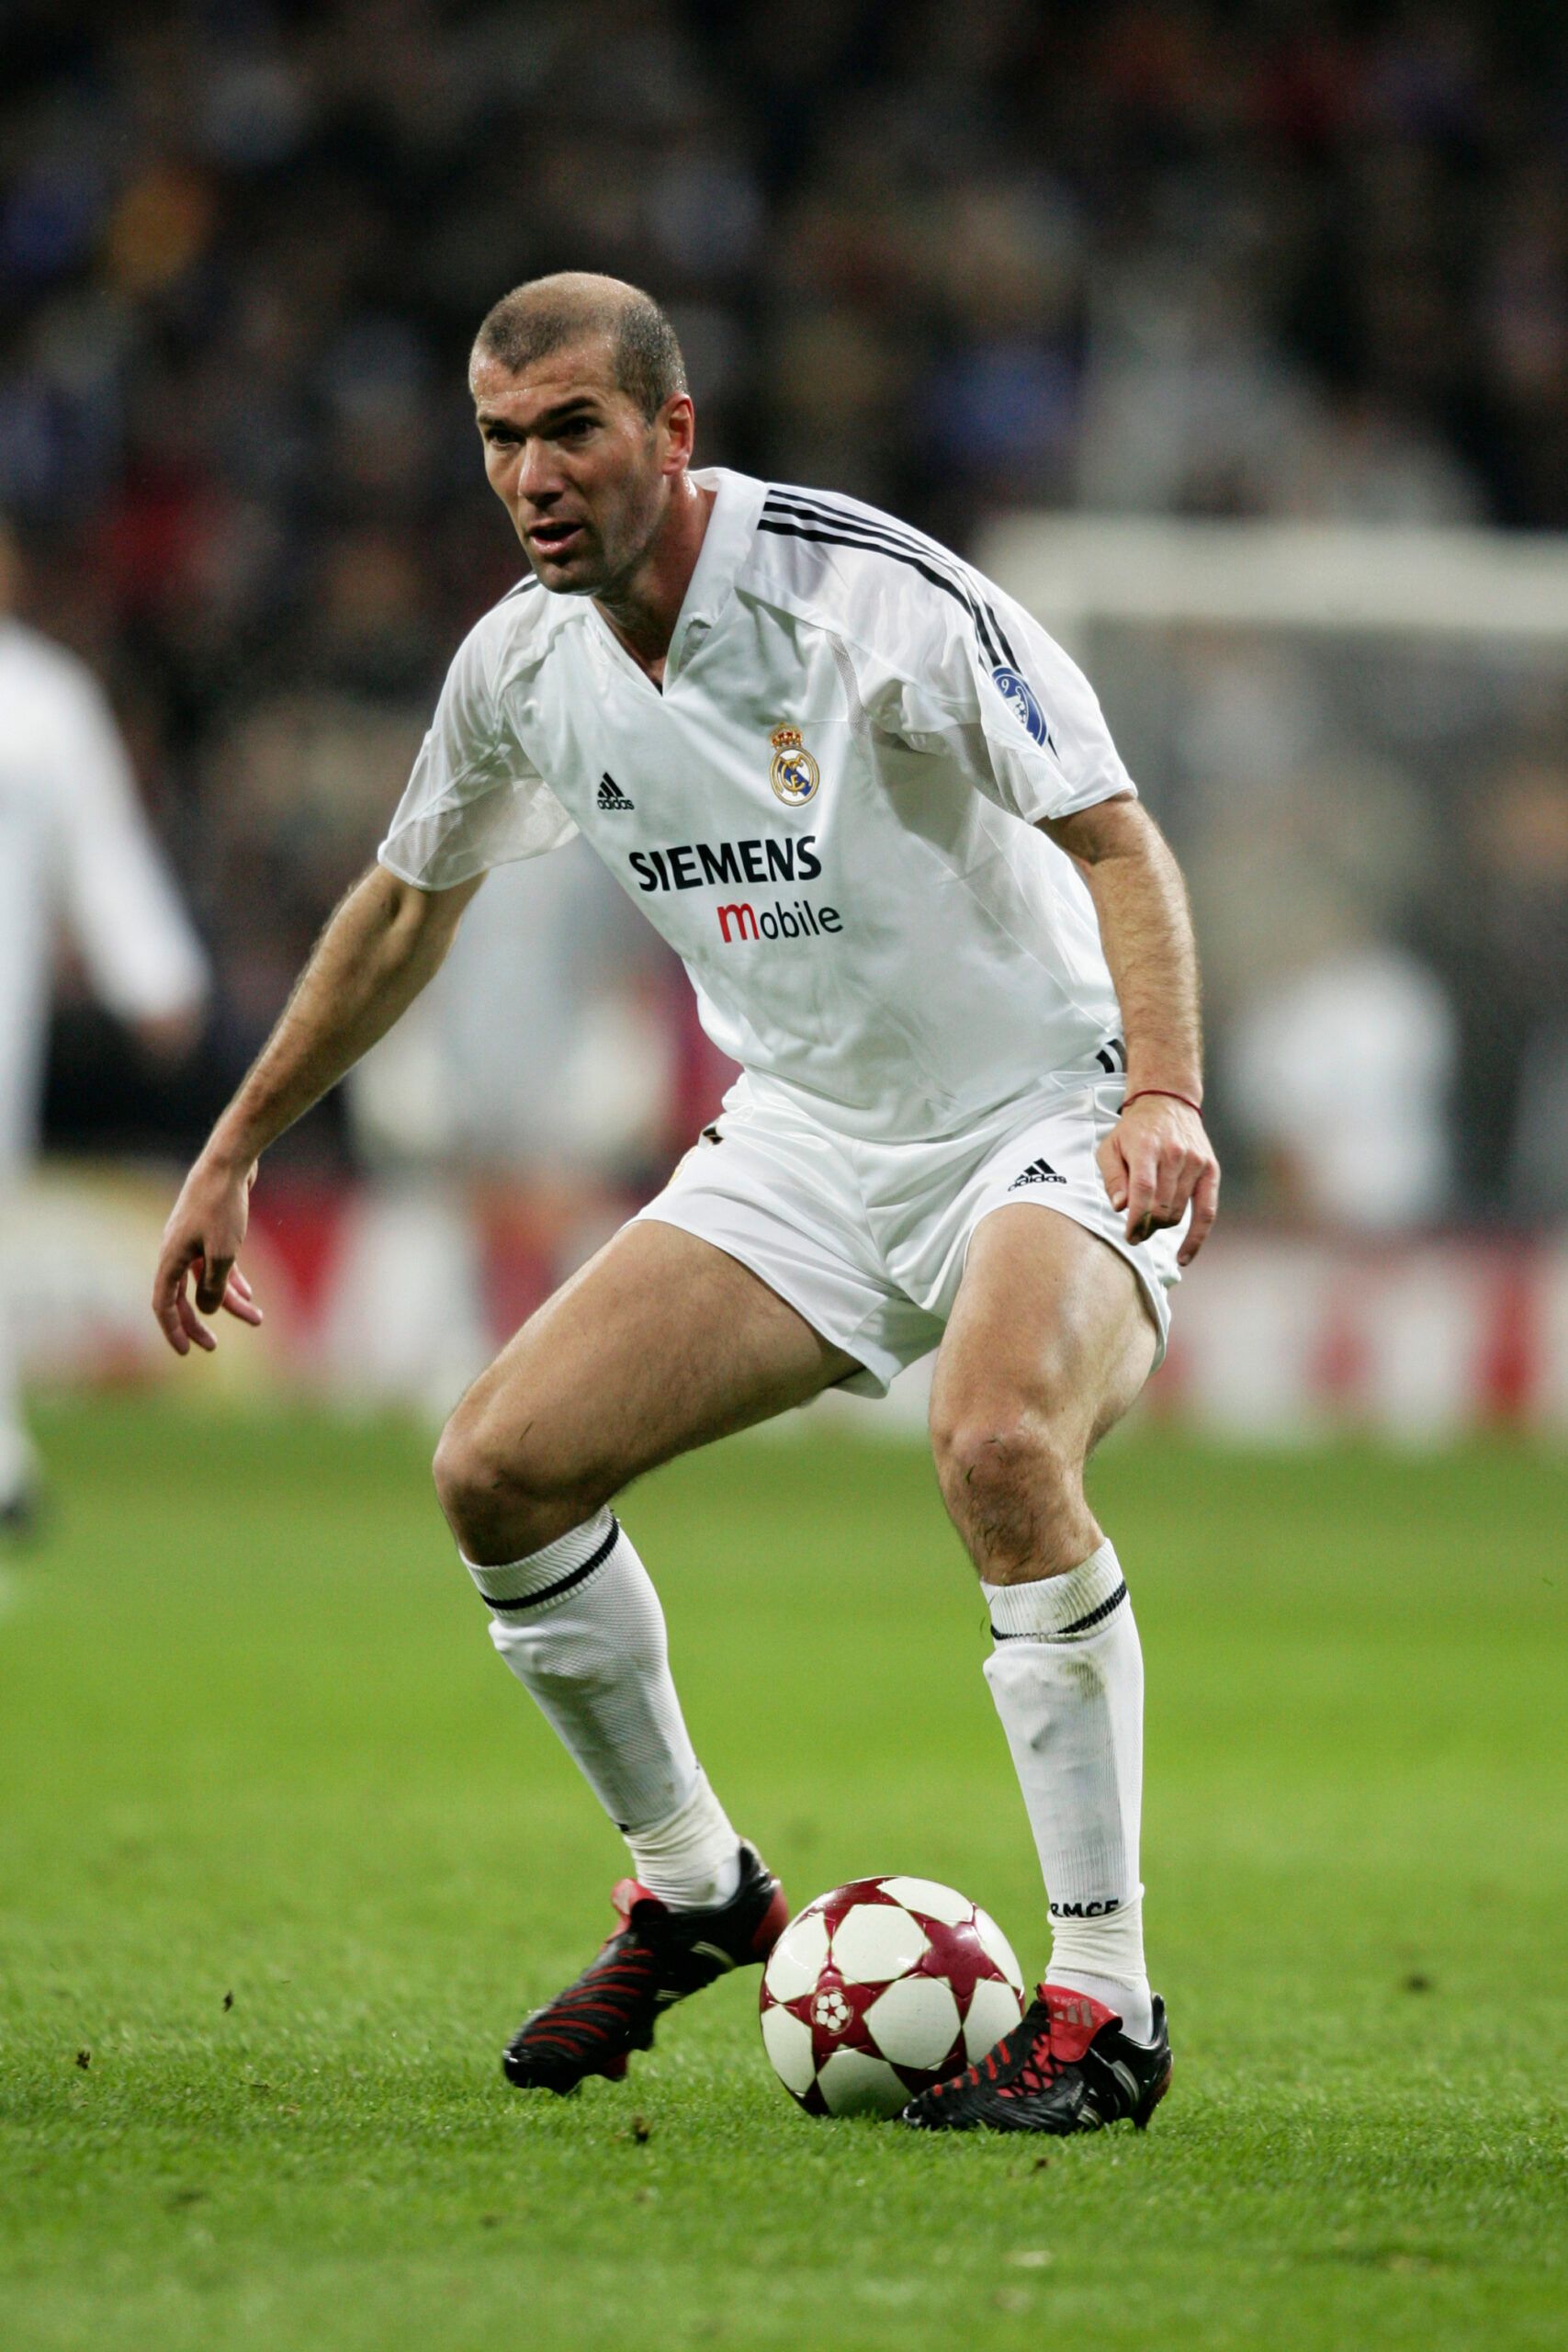 Real's Zidane on the ball.